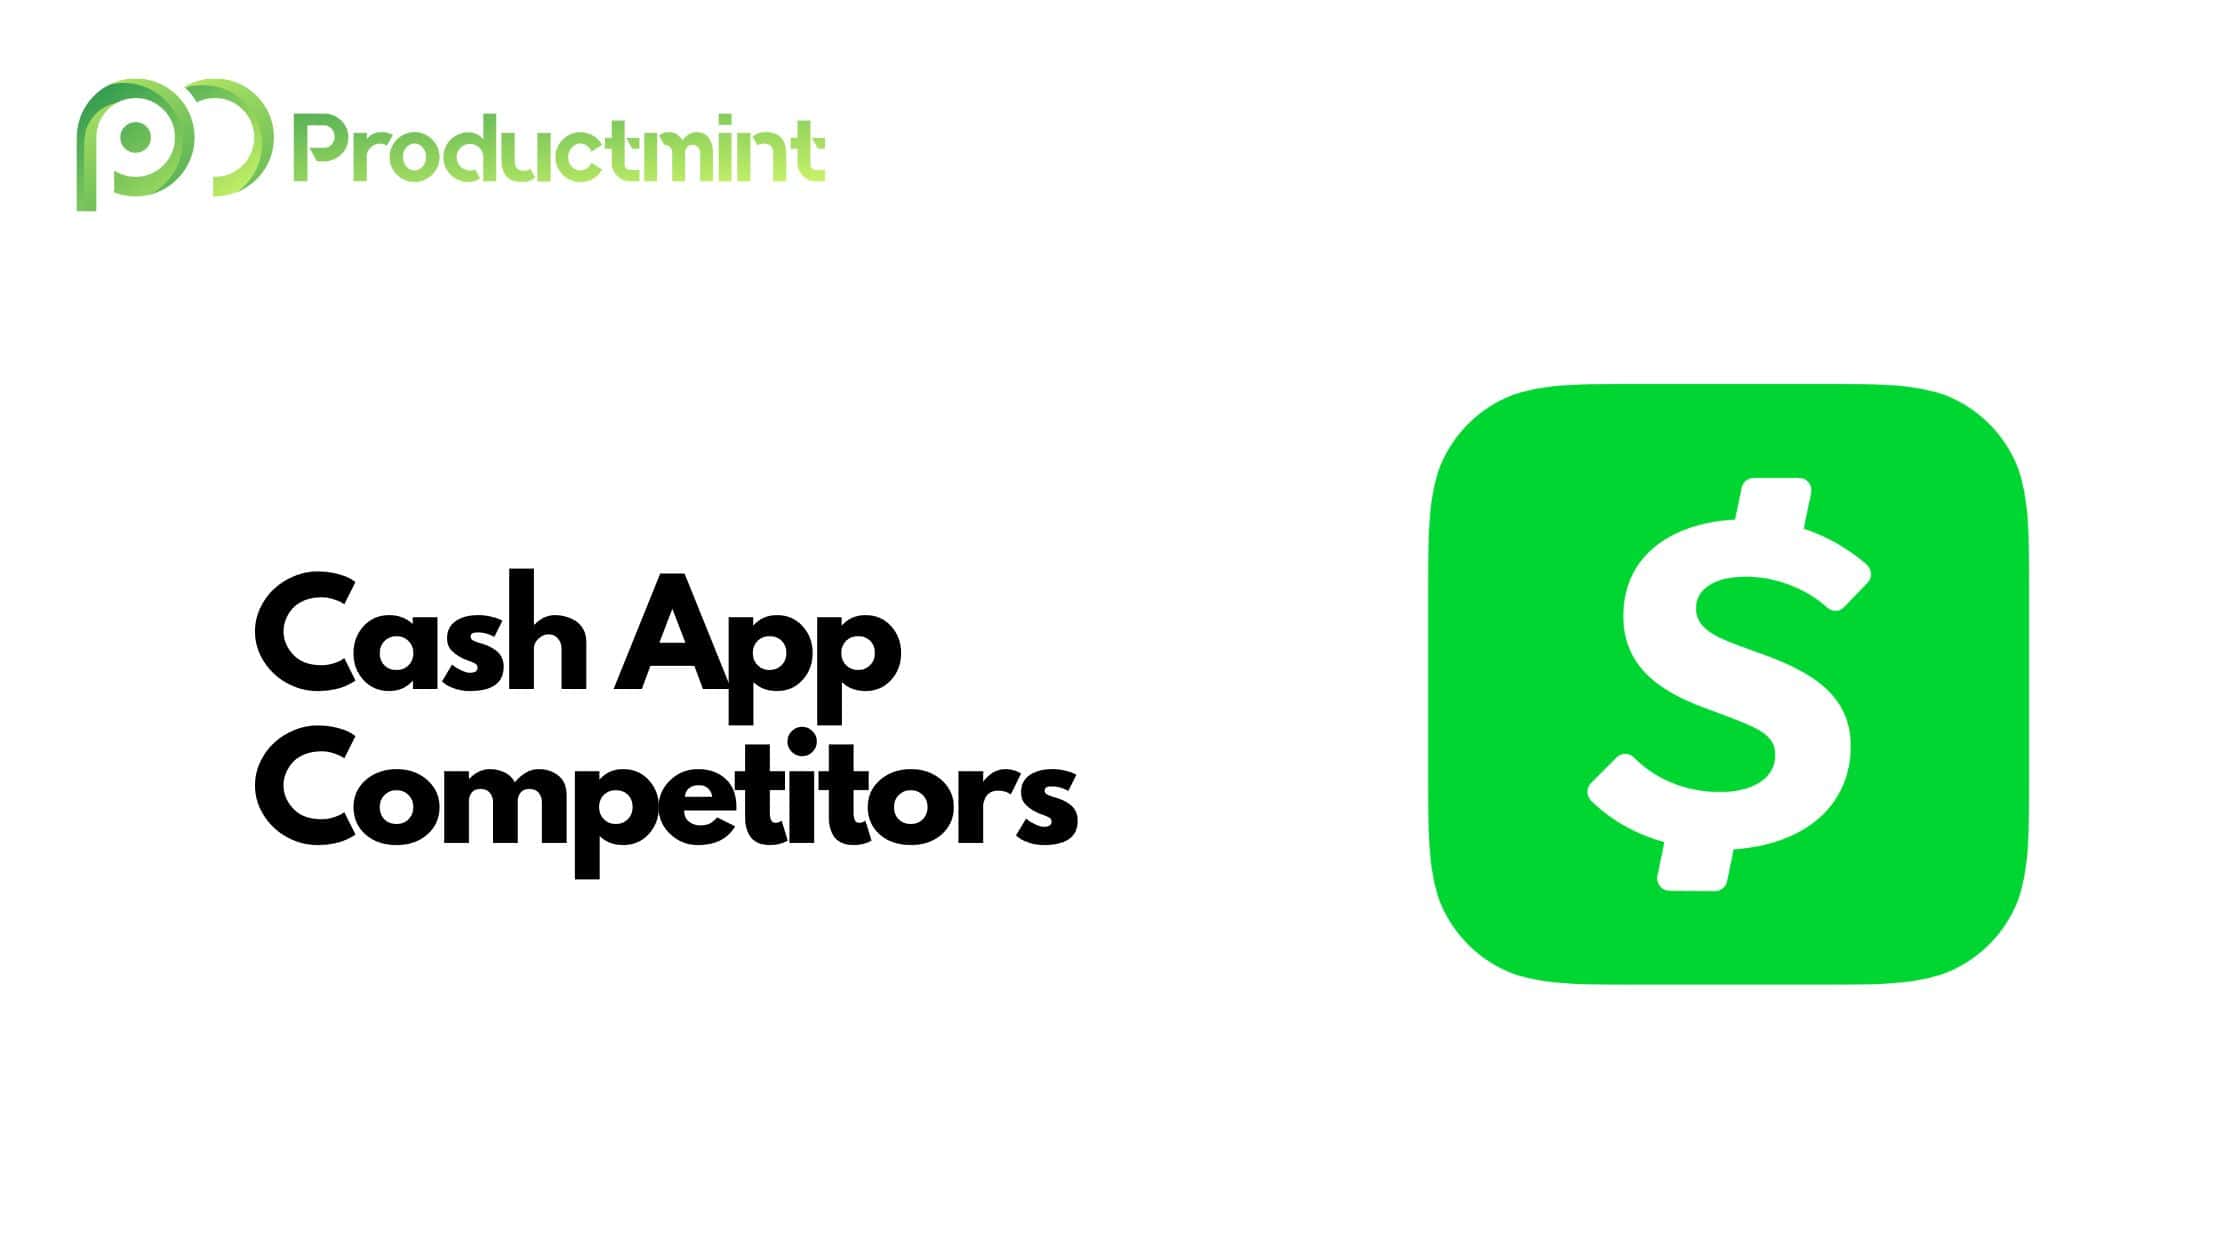 Cash App Competitors